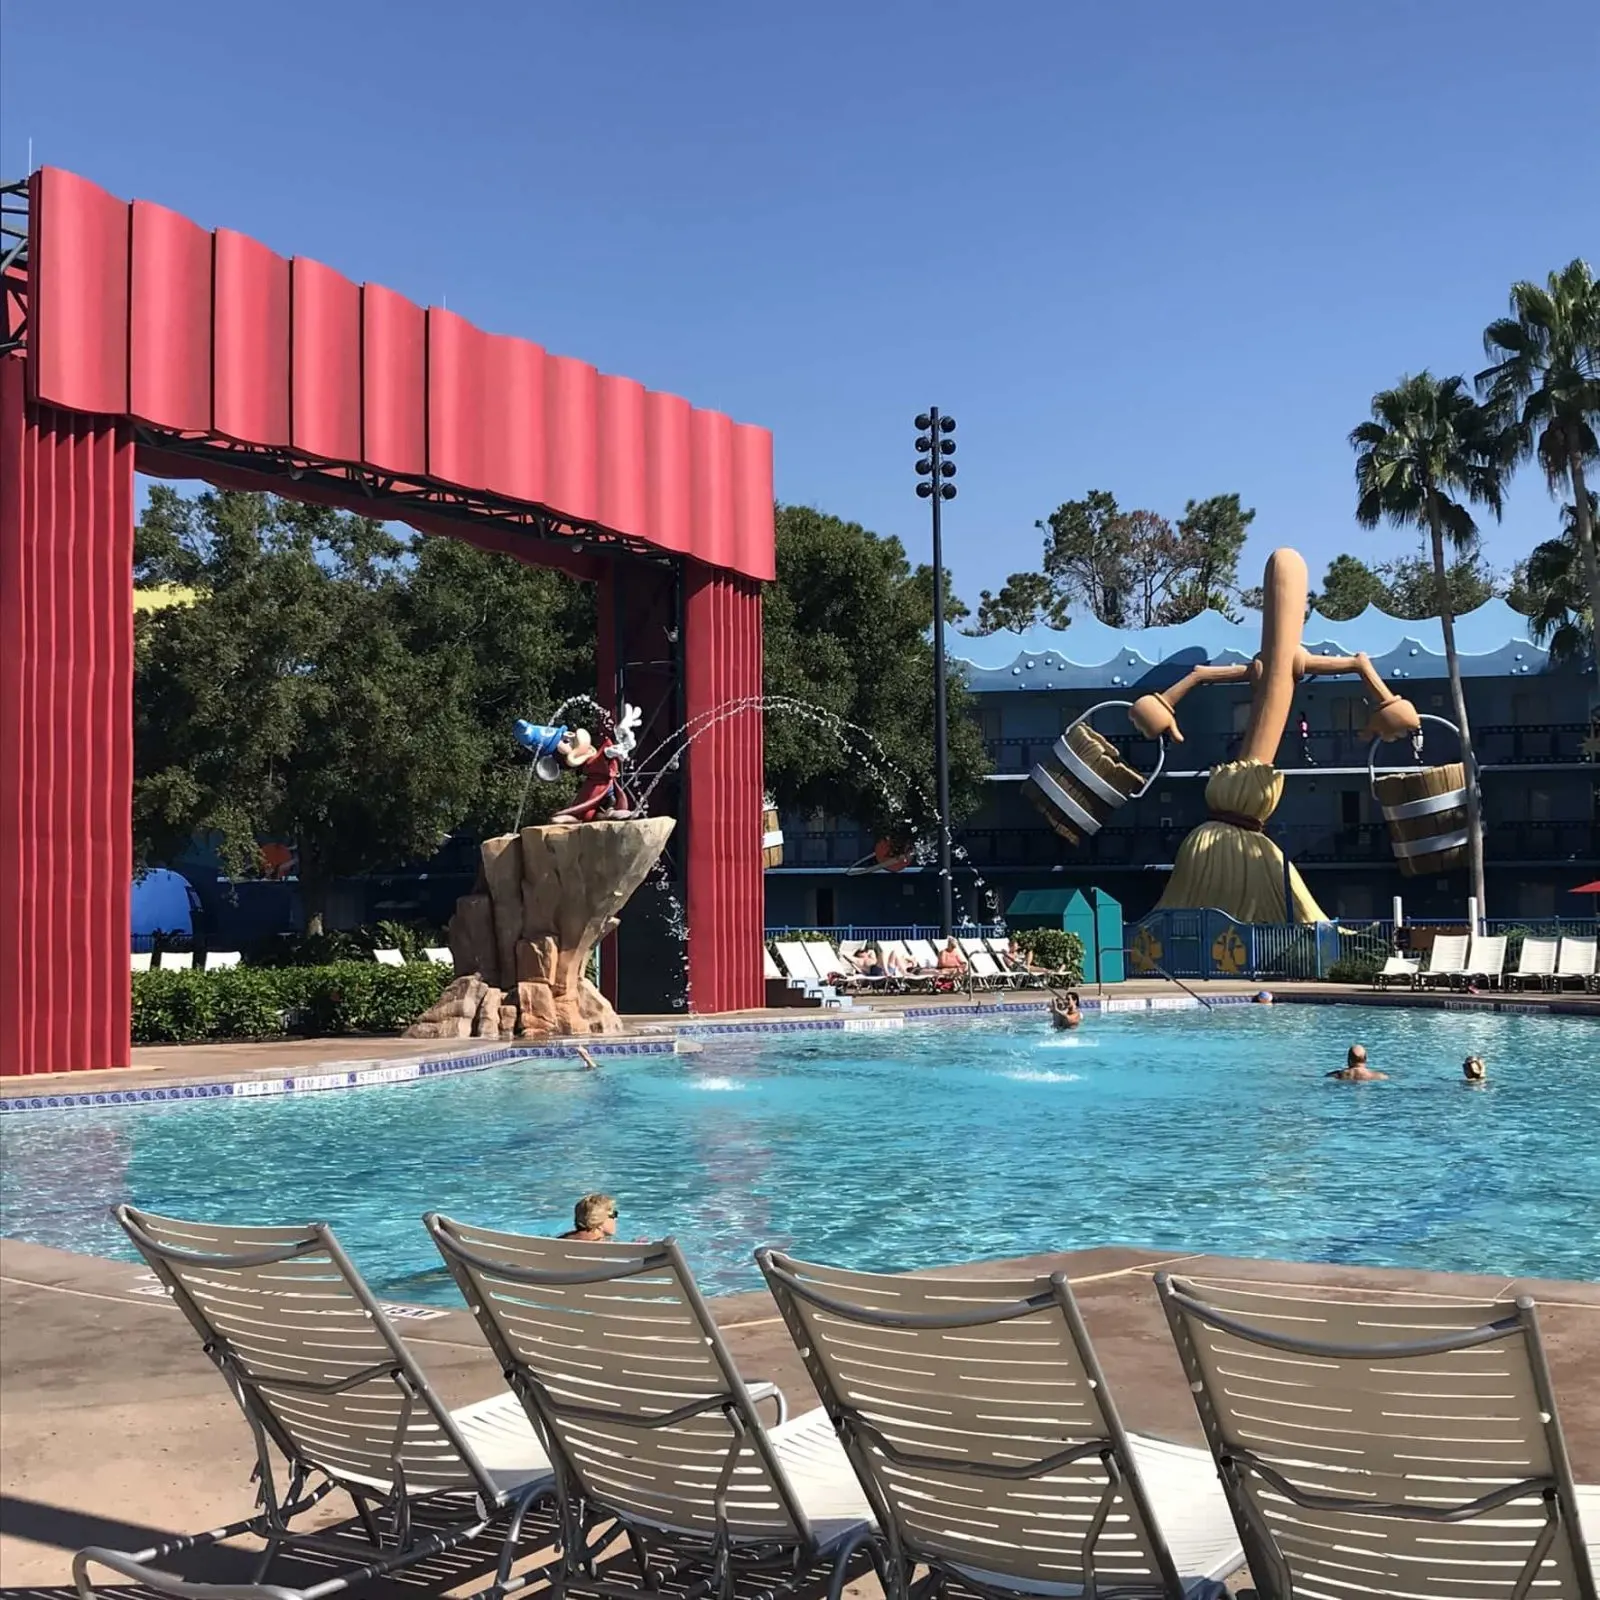 Pool at Disney's All-Star Movies resort